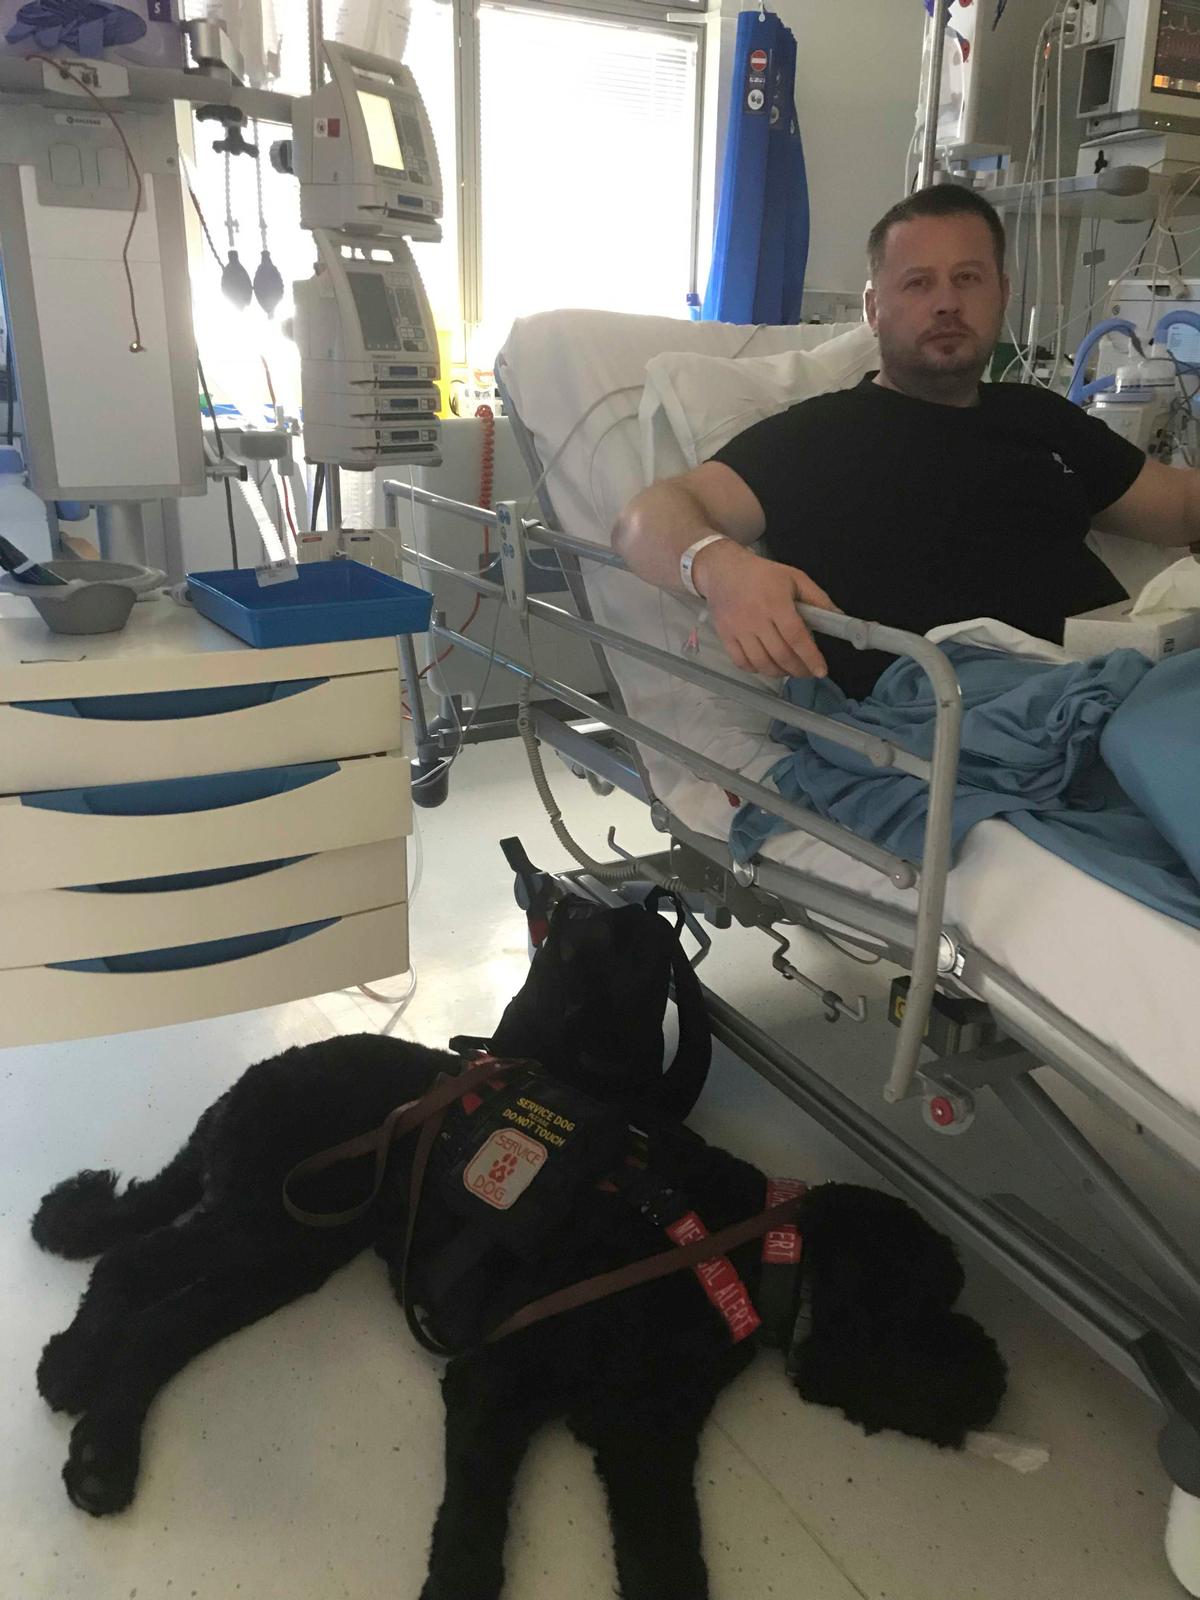 Jonathon Sheldon, 45, with service dog Teddy, in hospital (Caters News)